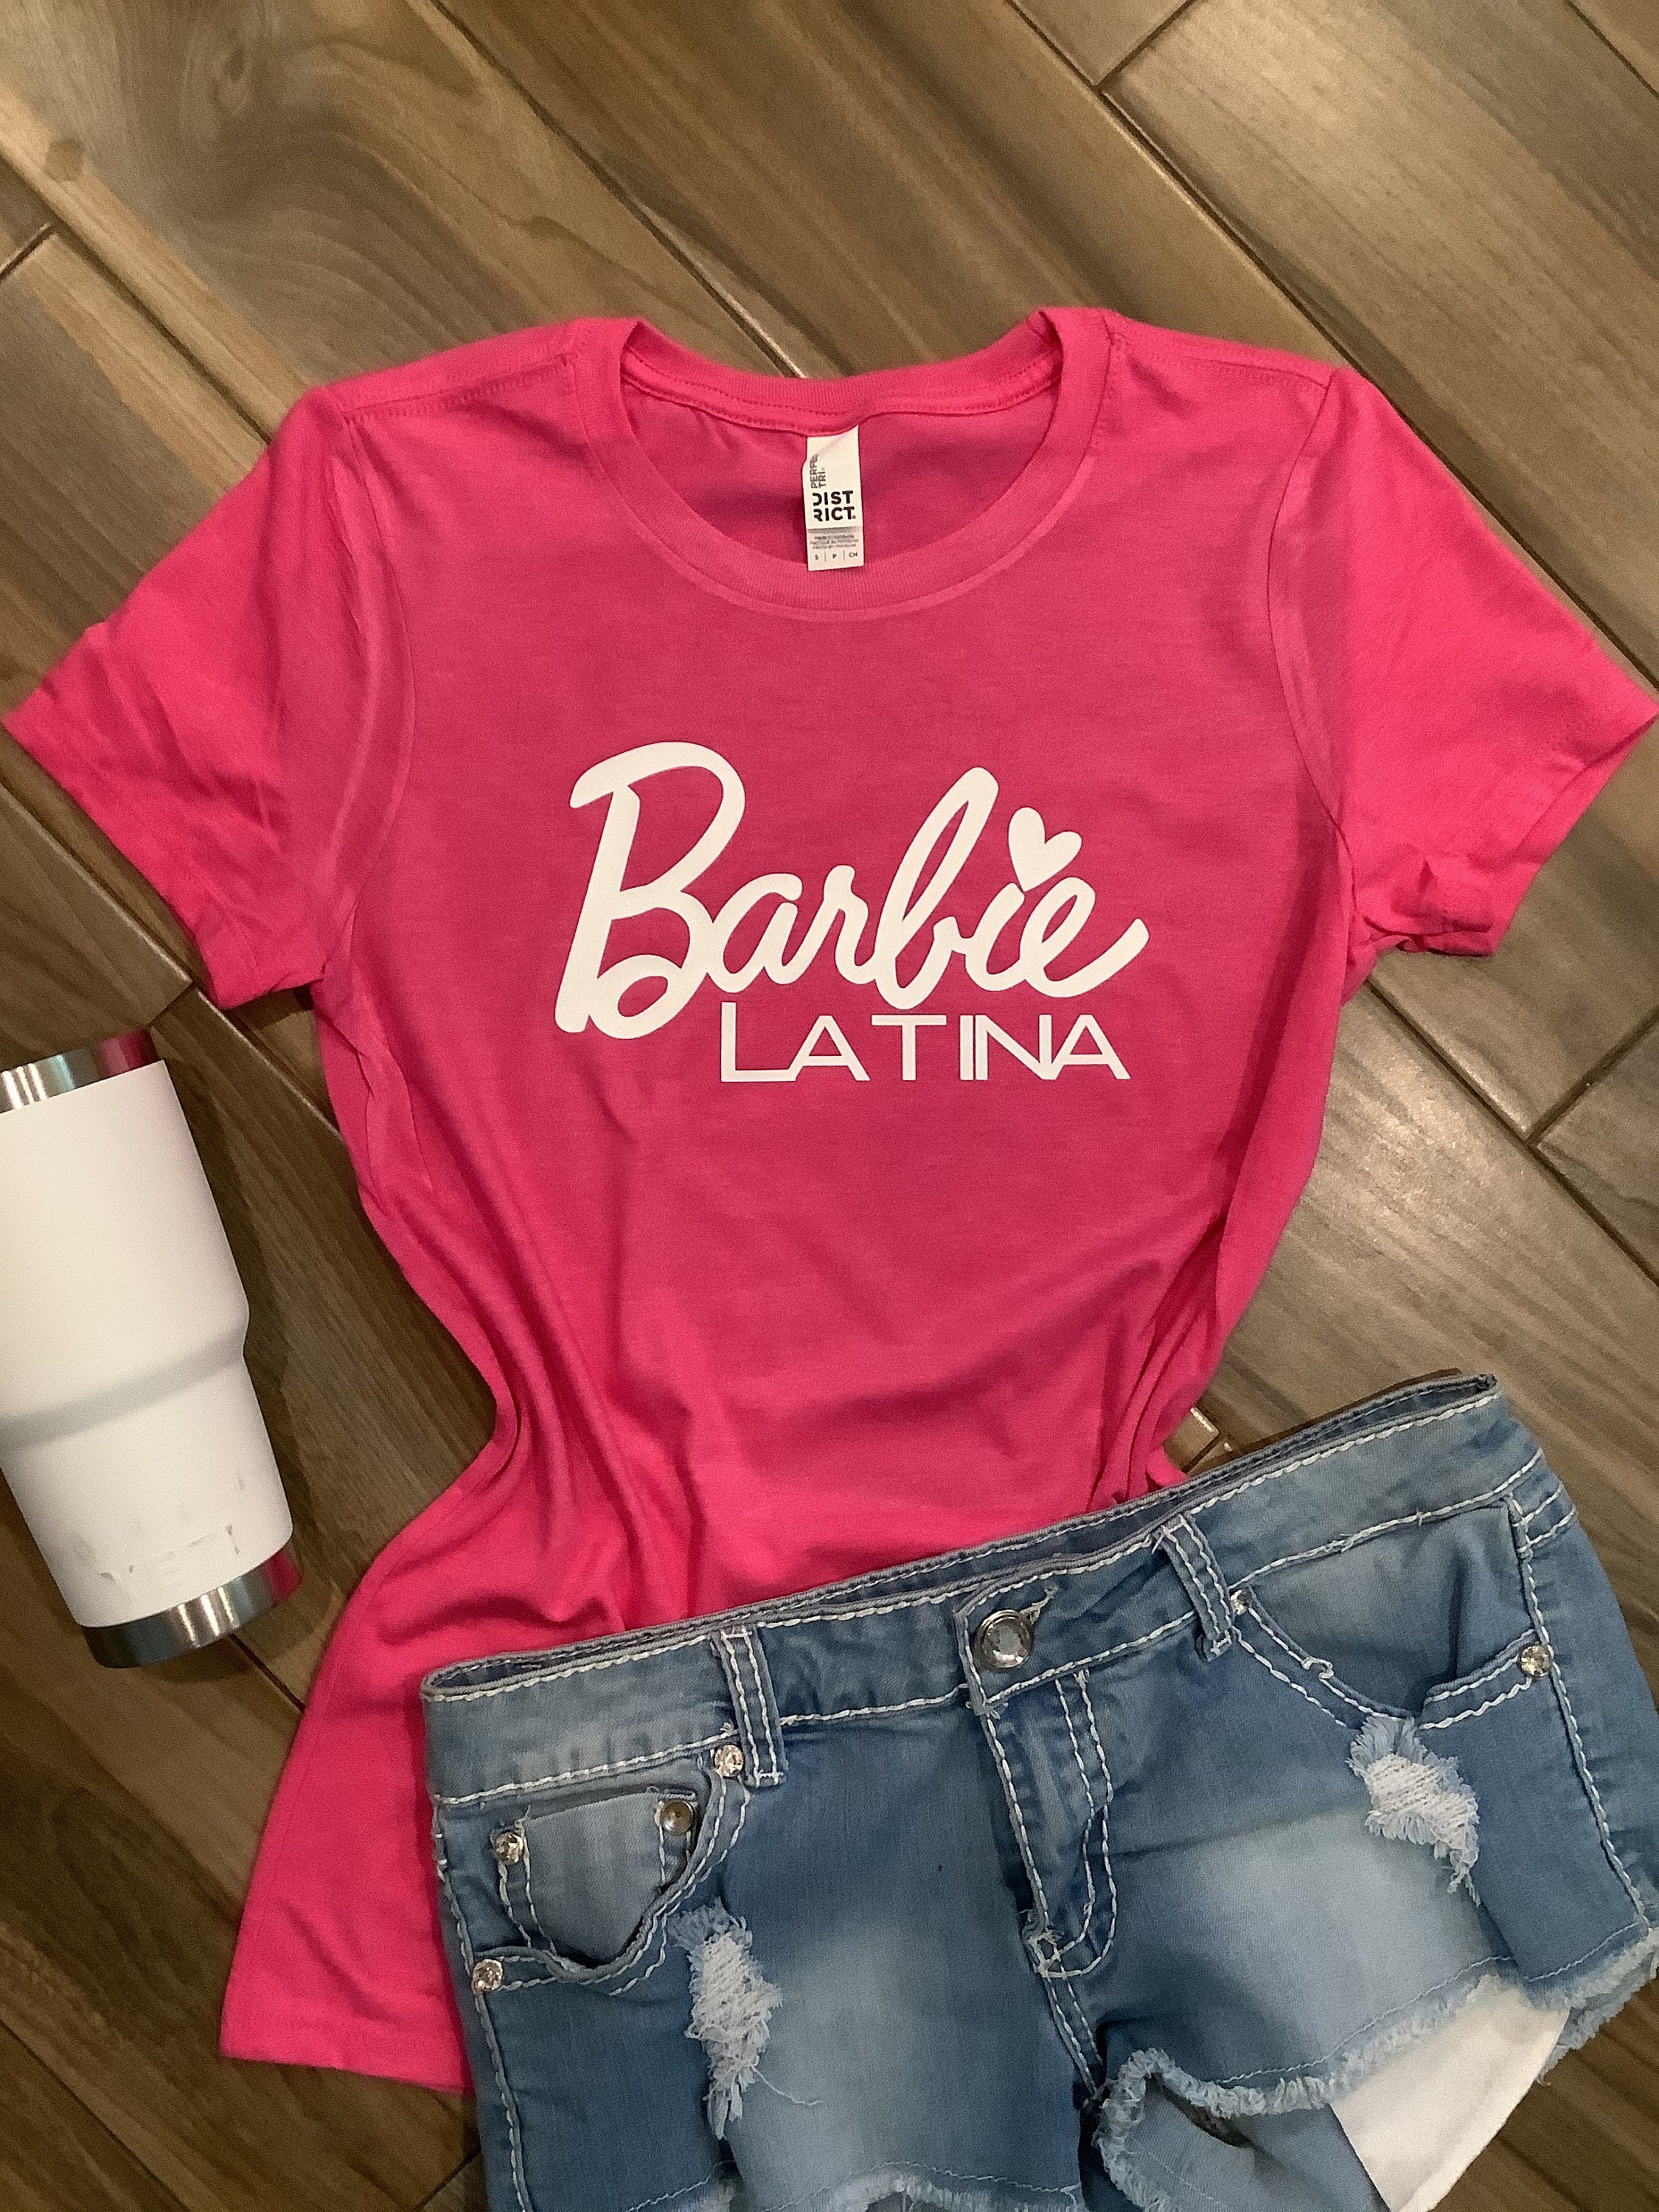 Pink Barbie Shirt: Fun Apparel for Women – LuLu Grace